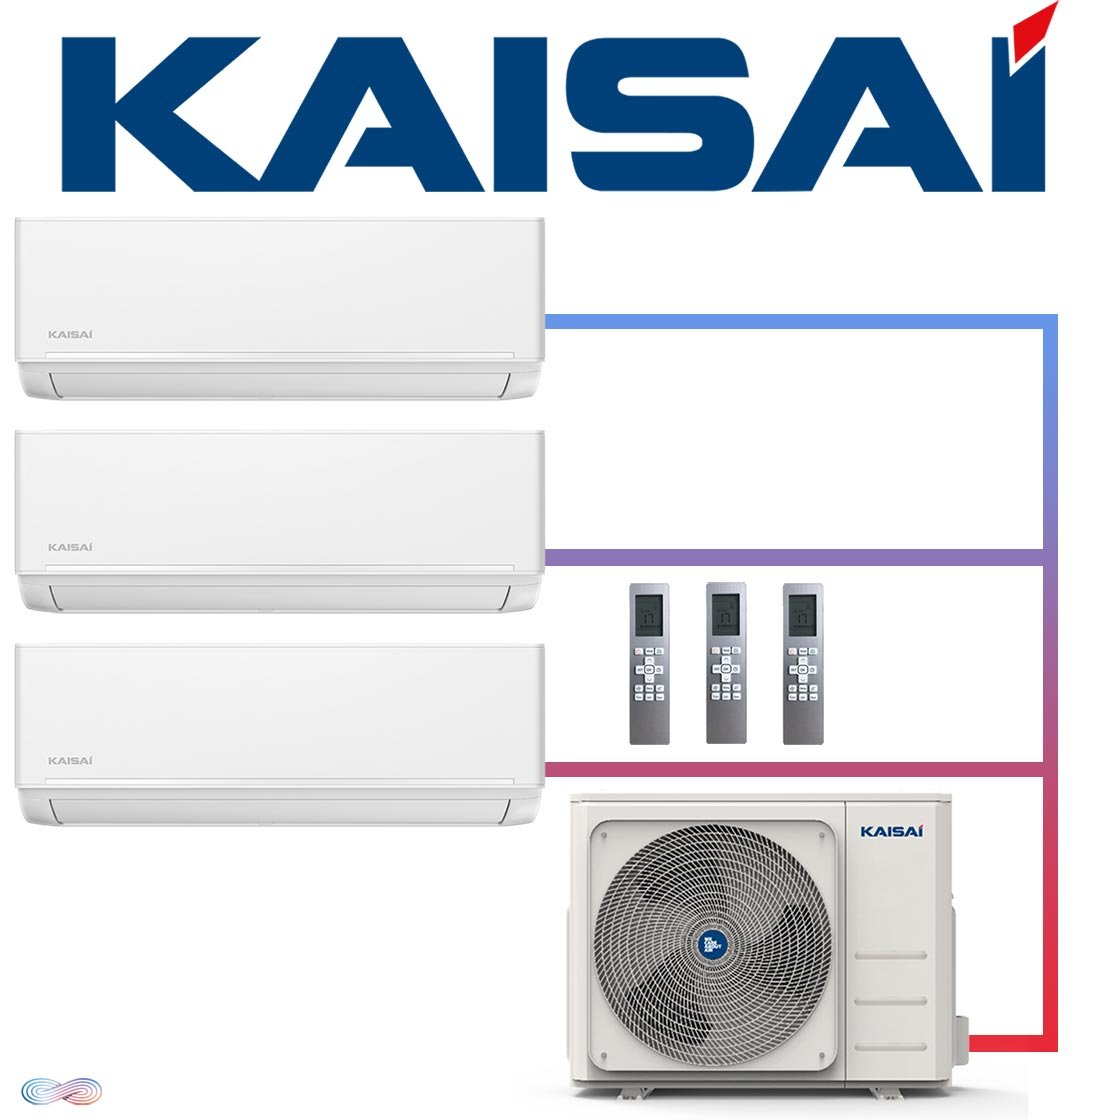 Kaisai Multisplit Klimaanlage ICE white 3x KLW